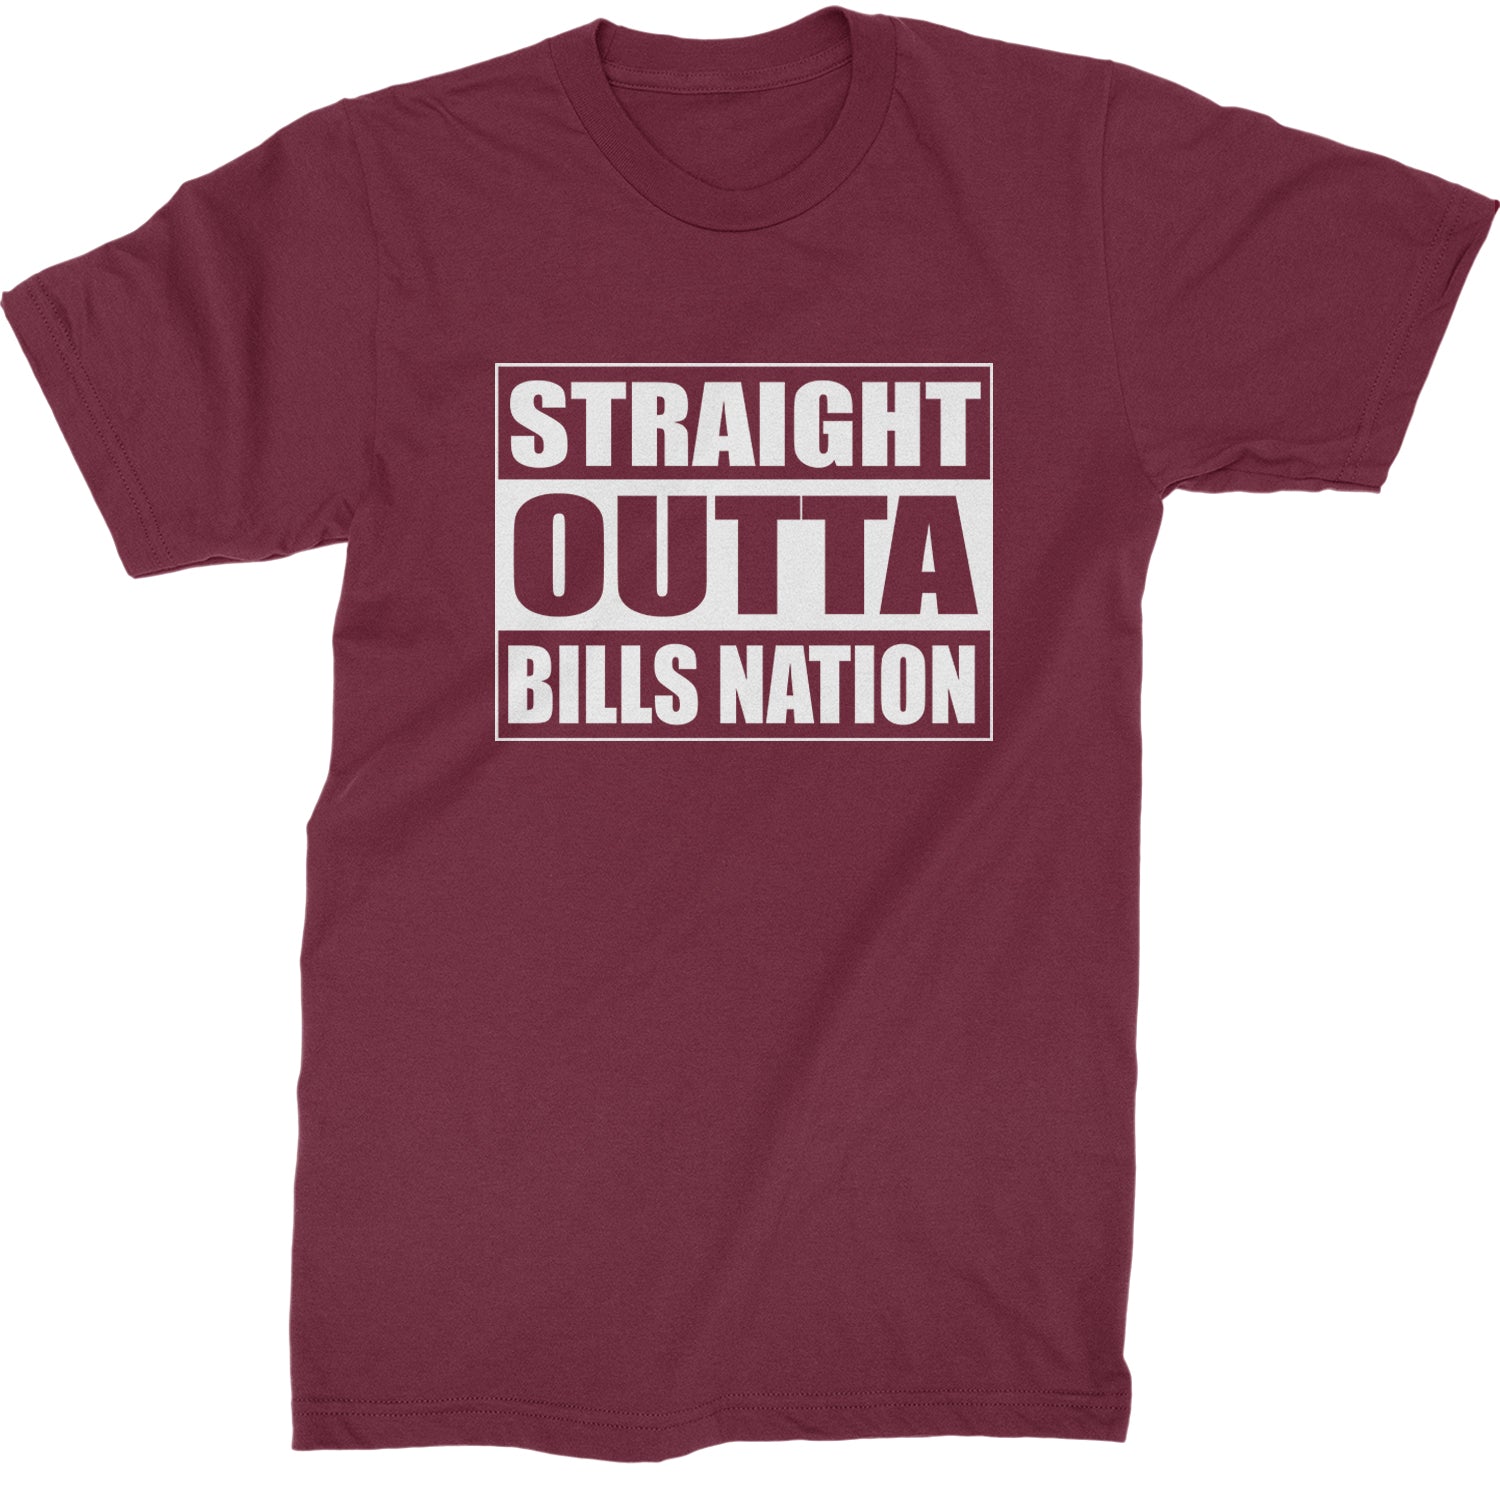 Straight Outta Bills Nation  Mens T-shirt Maroon